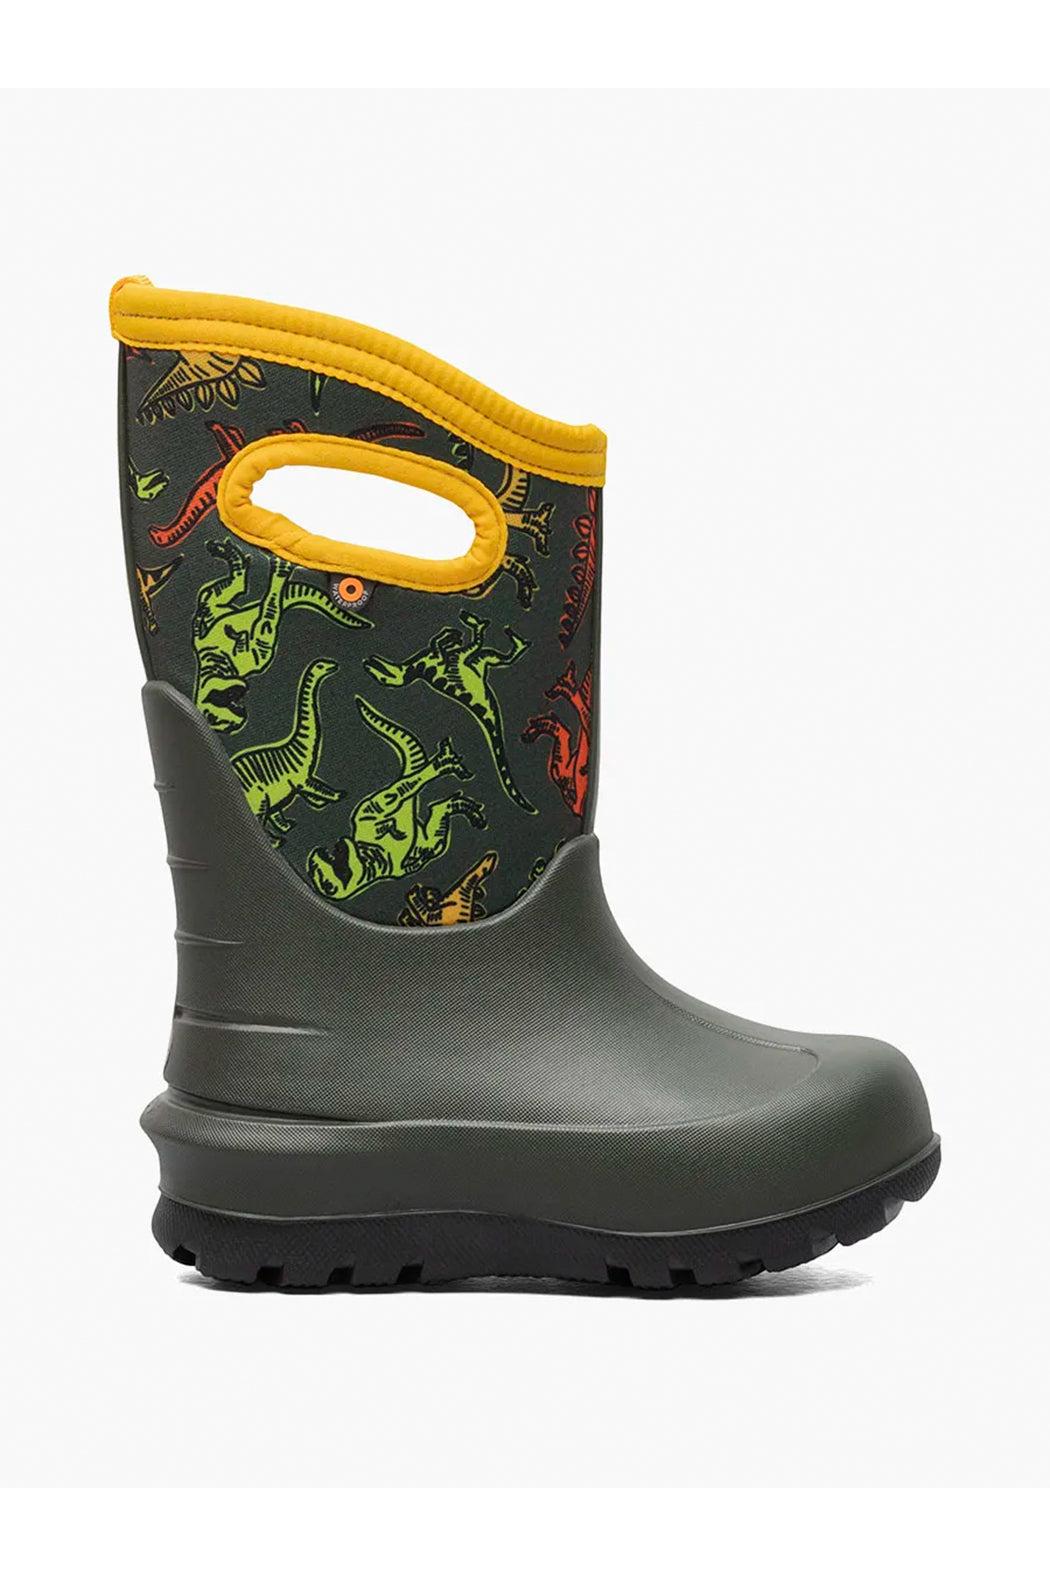 BOGS Neo-Classic Super Dino Waterproof Winter Boots